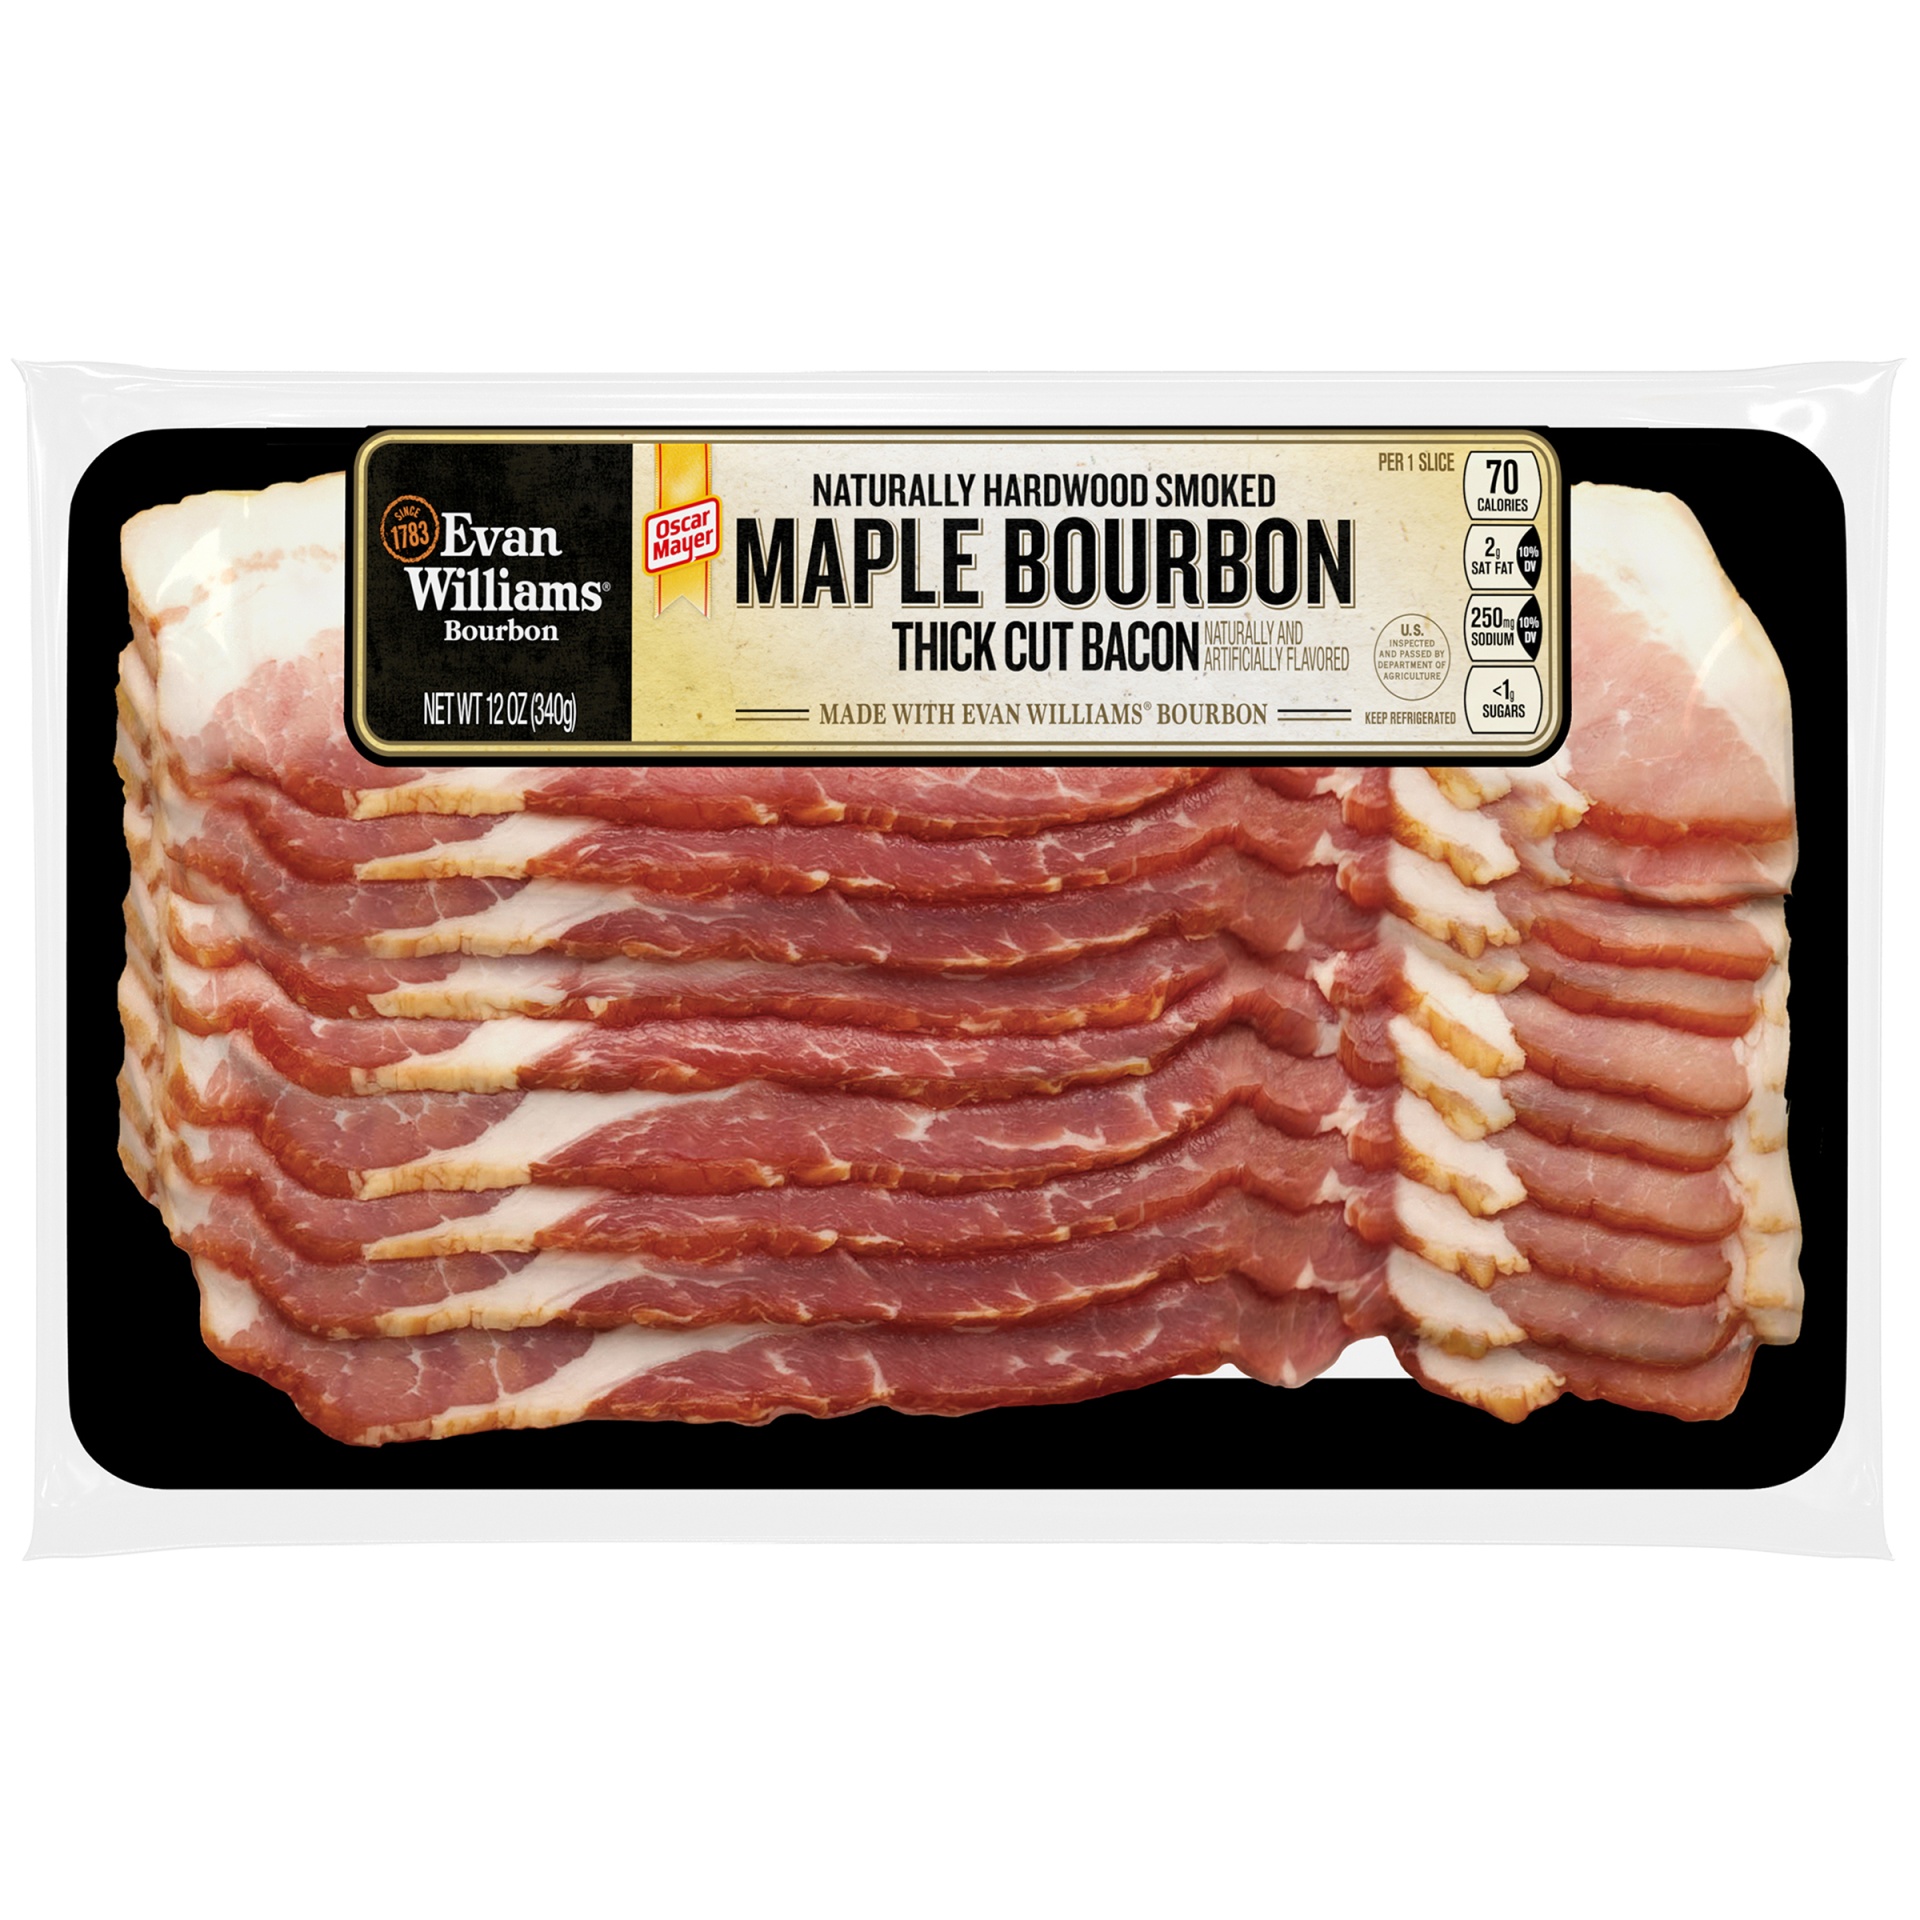 slide 1 of 12, Oscar Mayer Maple Bourbon Naturally Hardwood Smoked Thick Cut Bacon with Evan Williams Bourbon, 8-10 slices, 12 oz